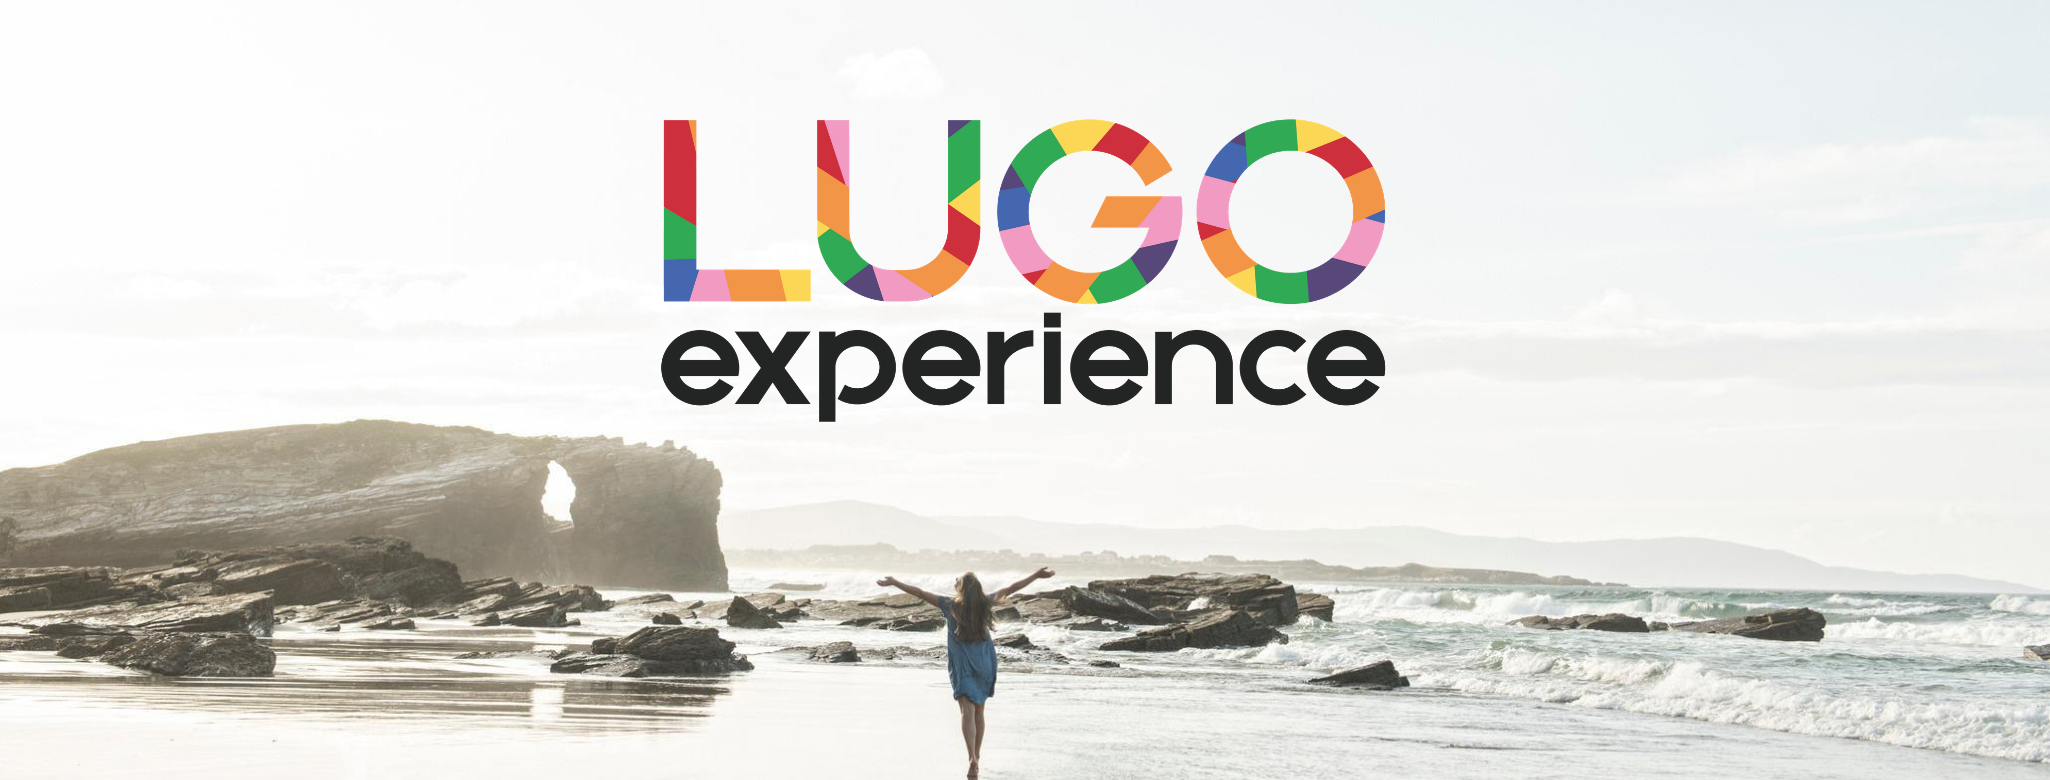 "Lugo Experience", o escaparate de experiencias turísticas de Lugo